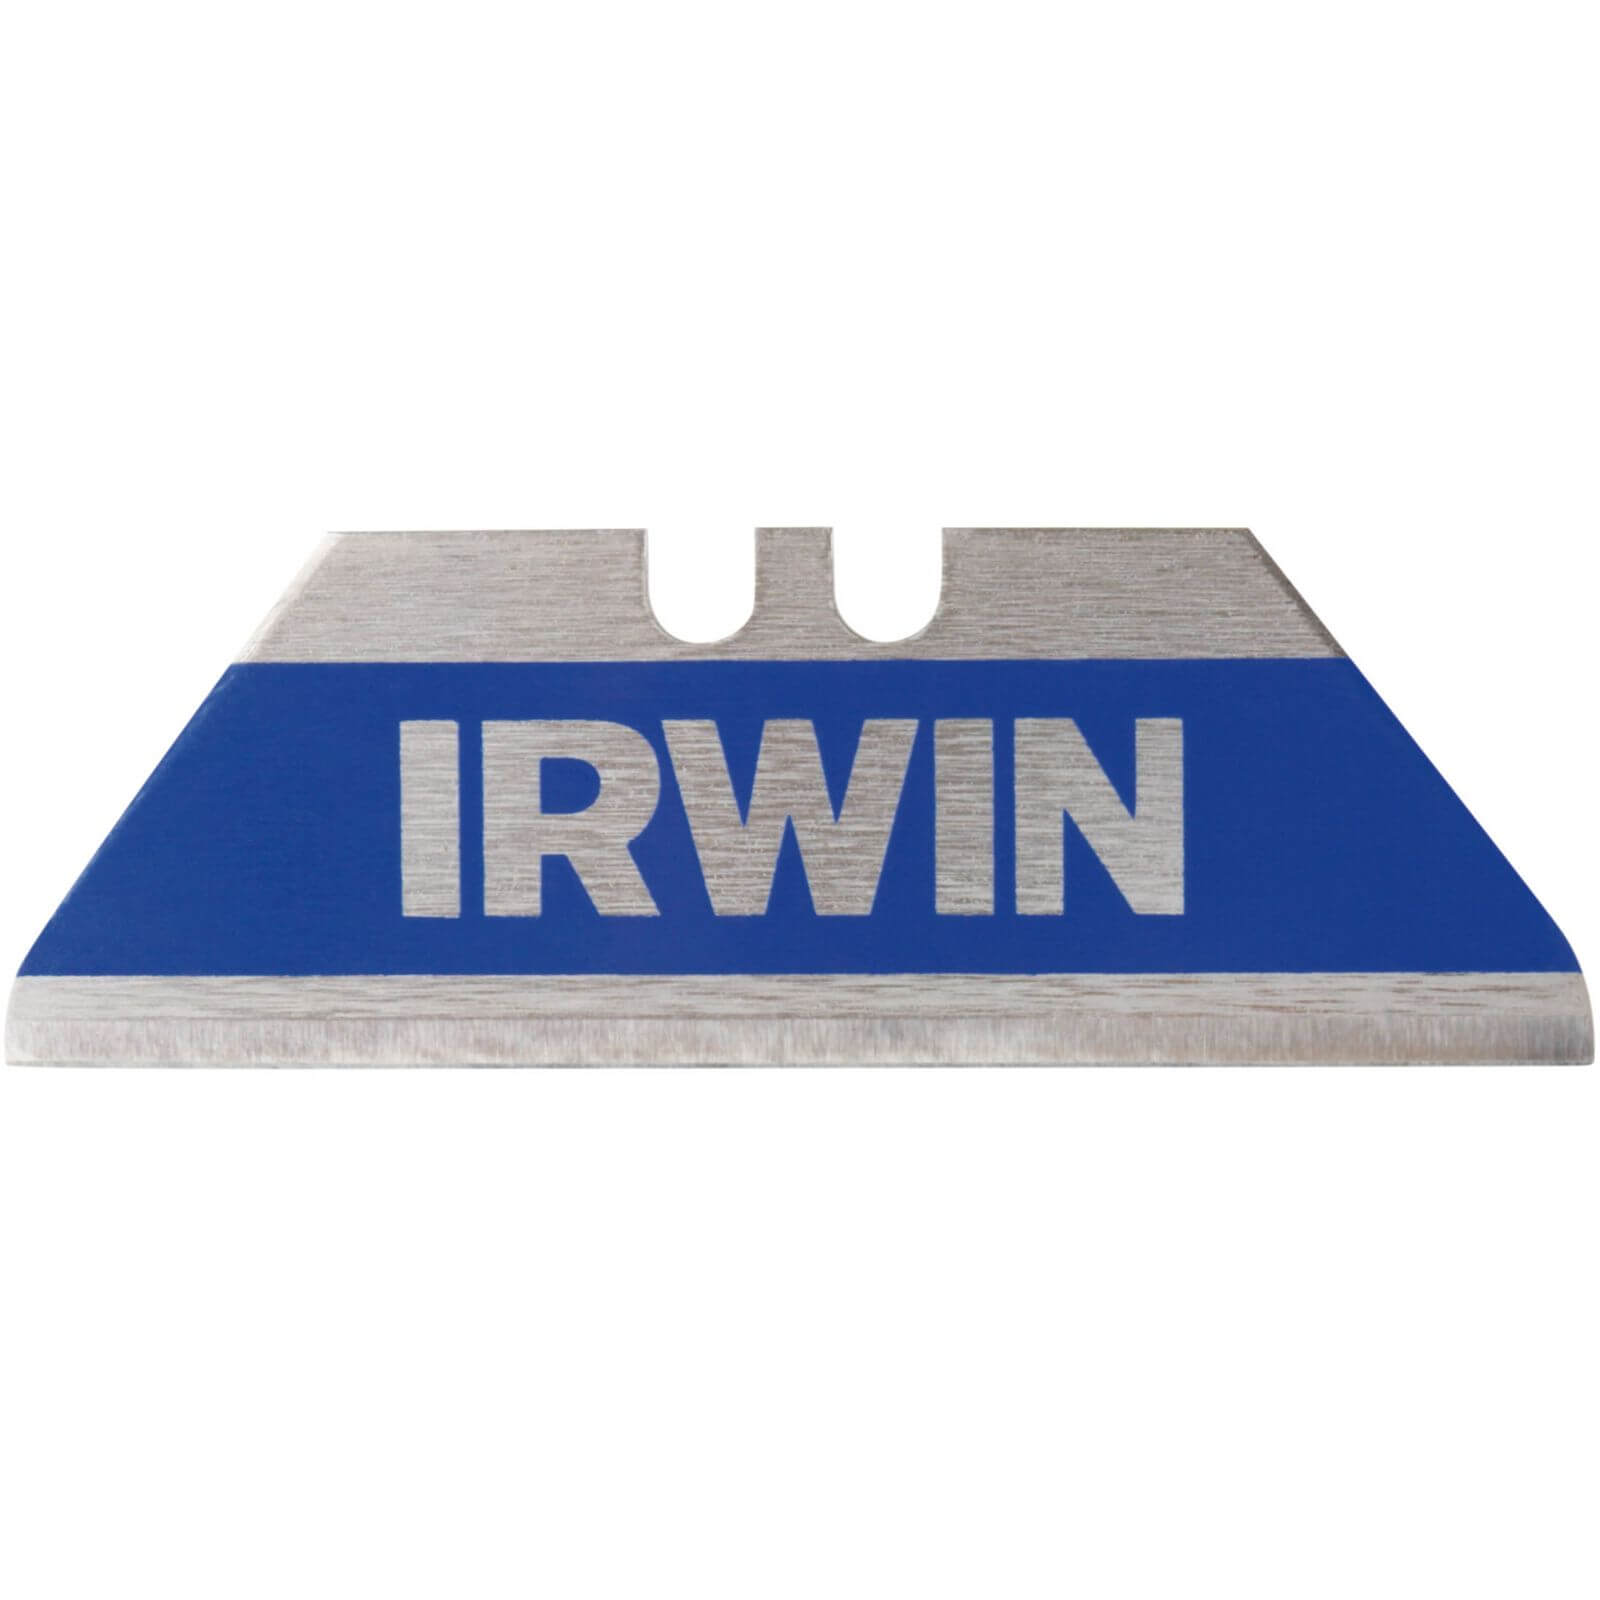 Irwin Bi-Metal Safety Blades - Pack of 5